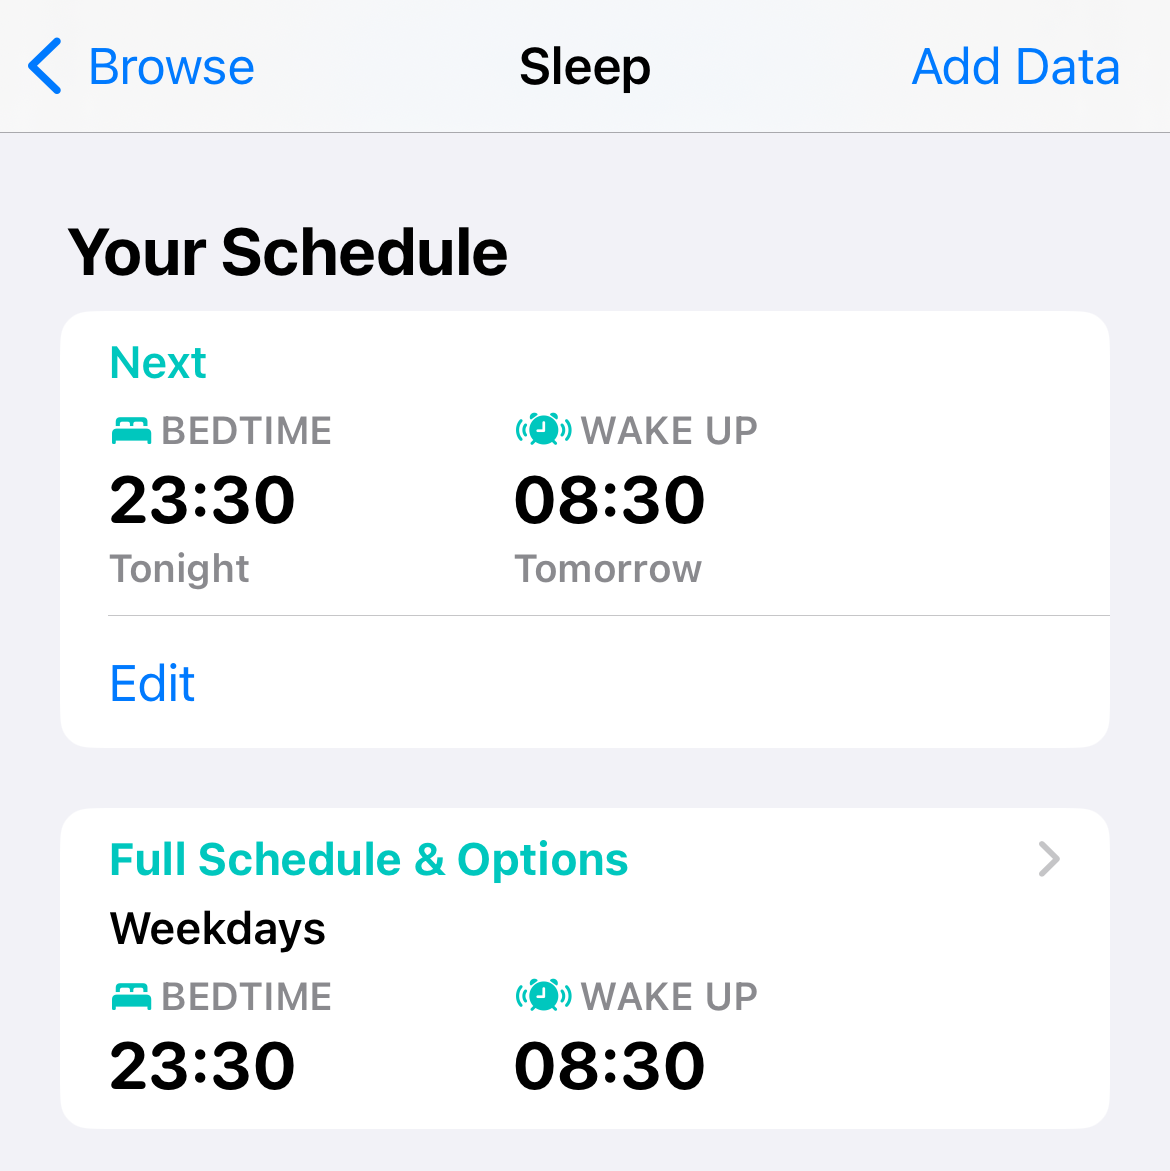 View full sleep schedule options in the iPhone Health app.